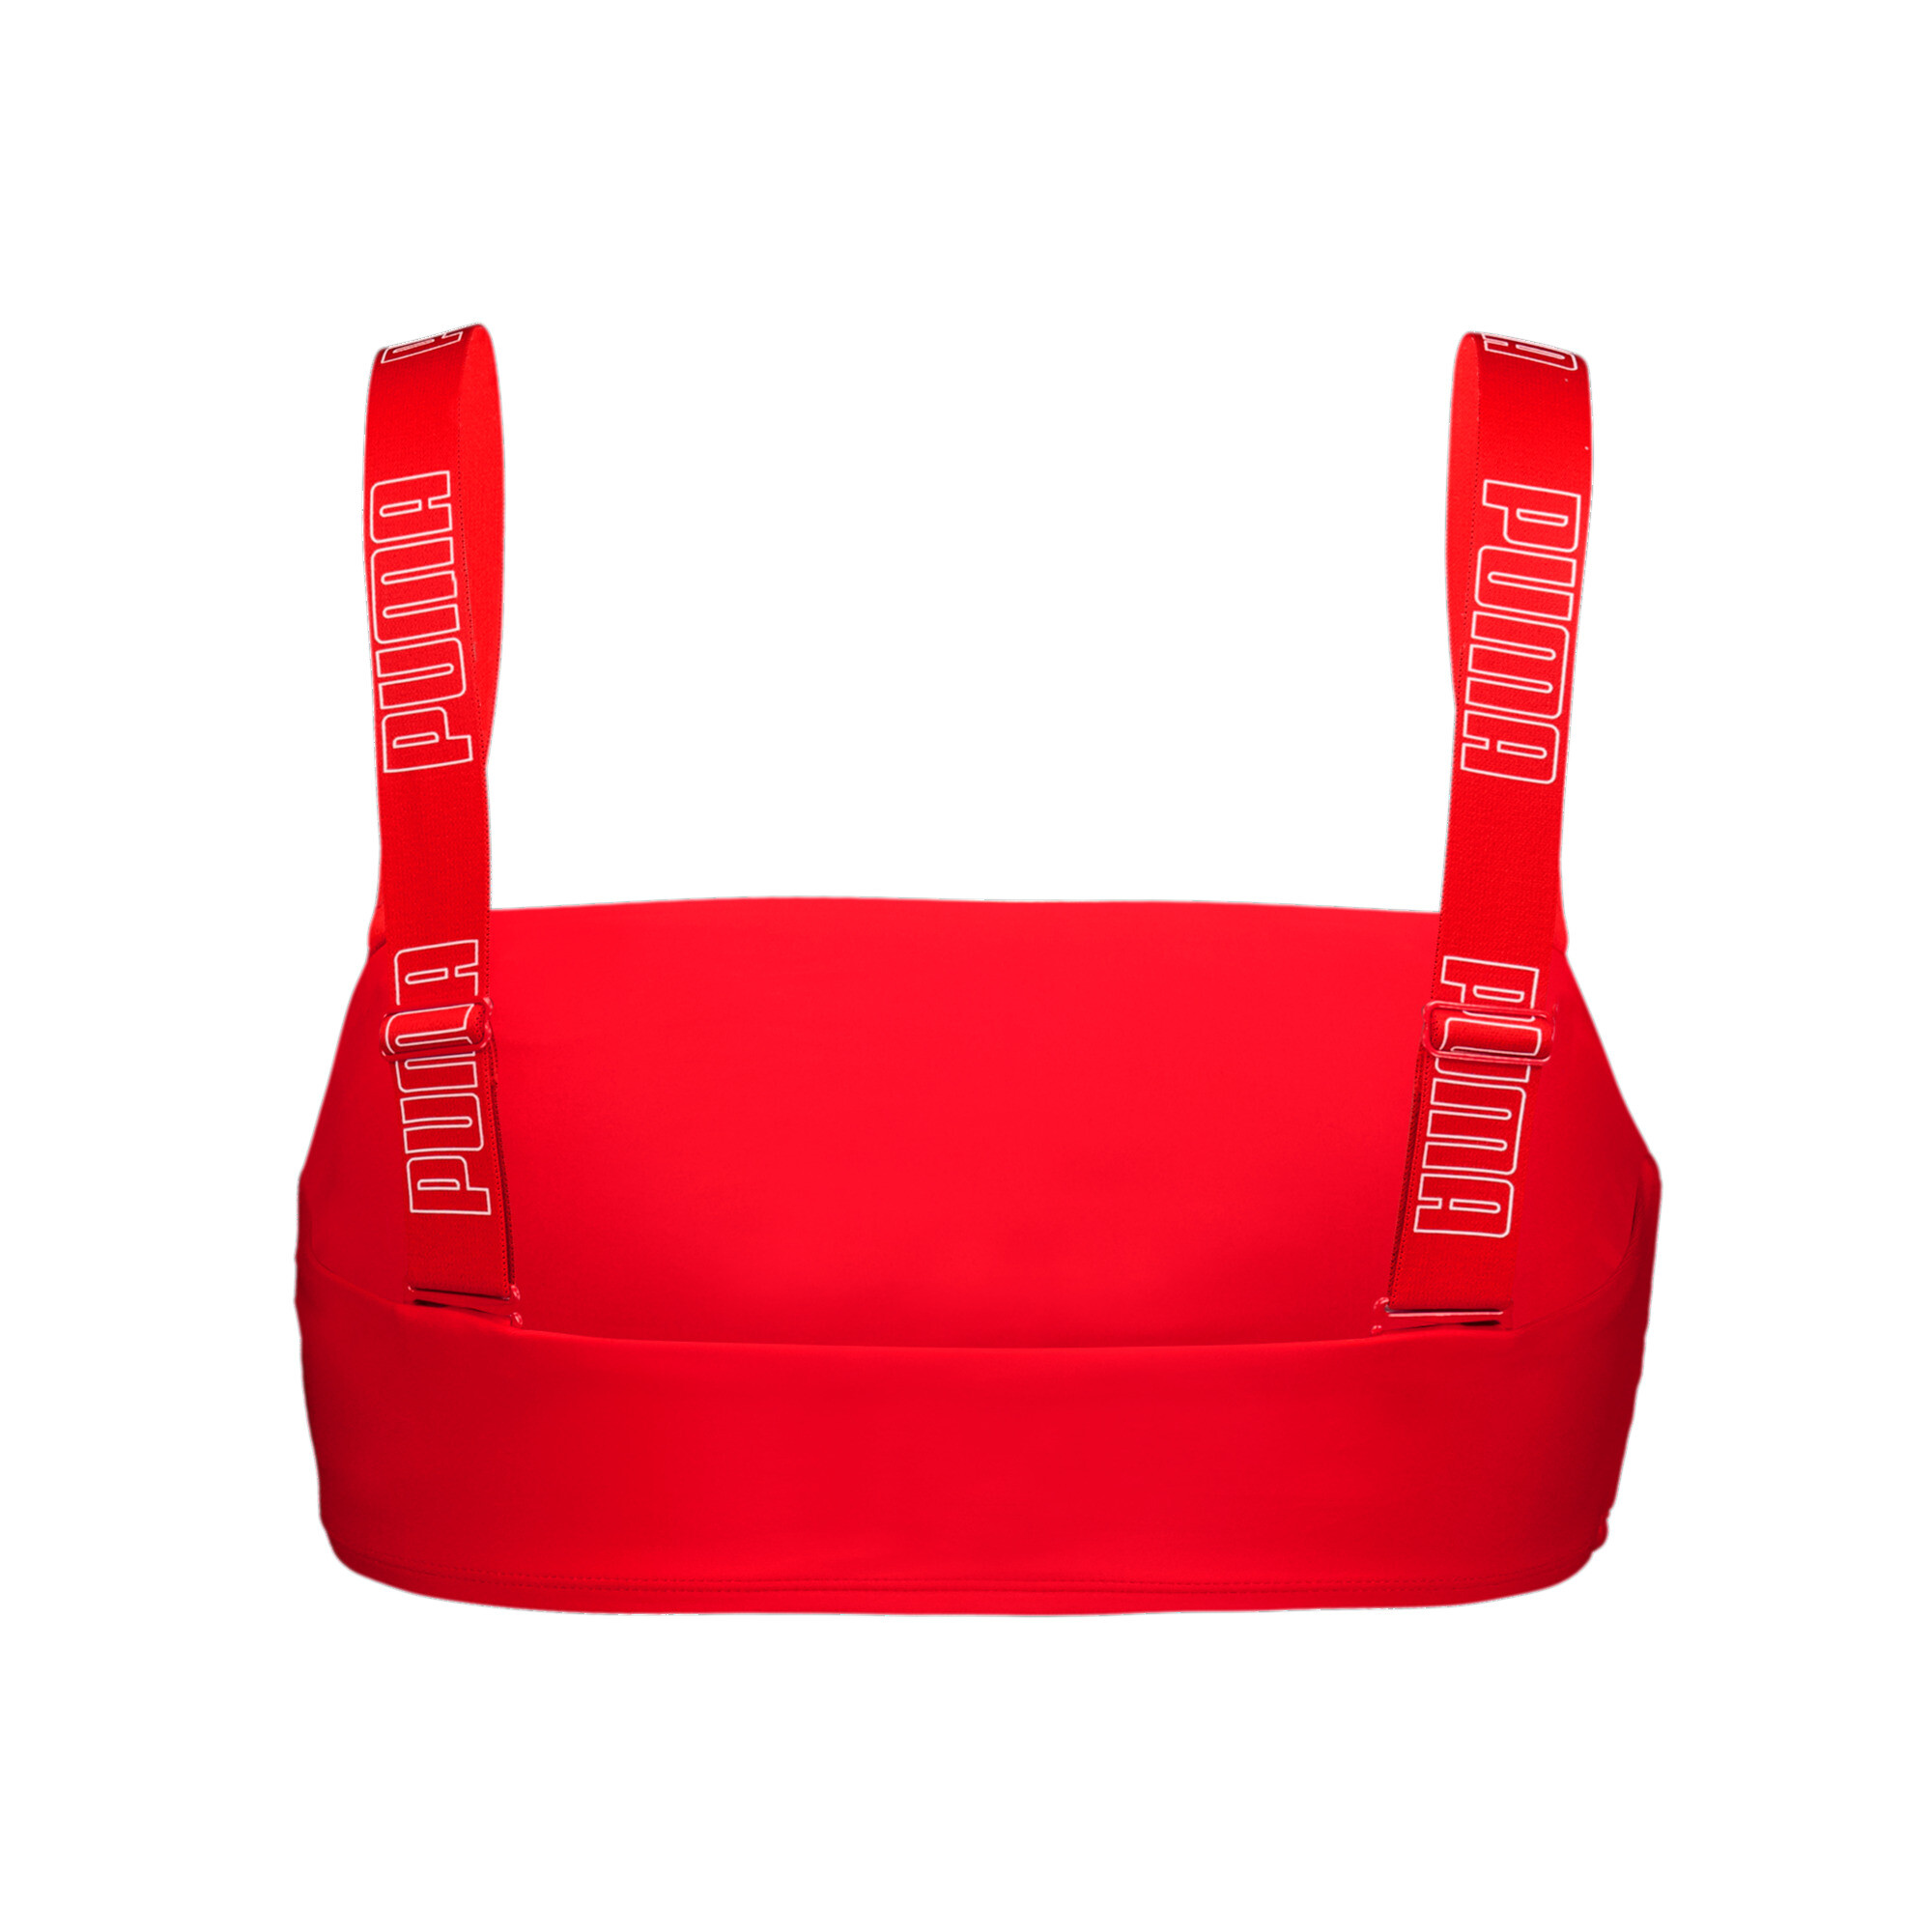 Women's Puma's Bandeau Top, Red, Size S, Sport